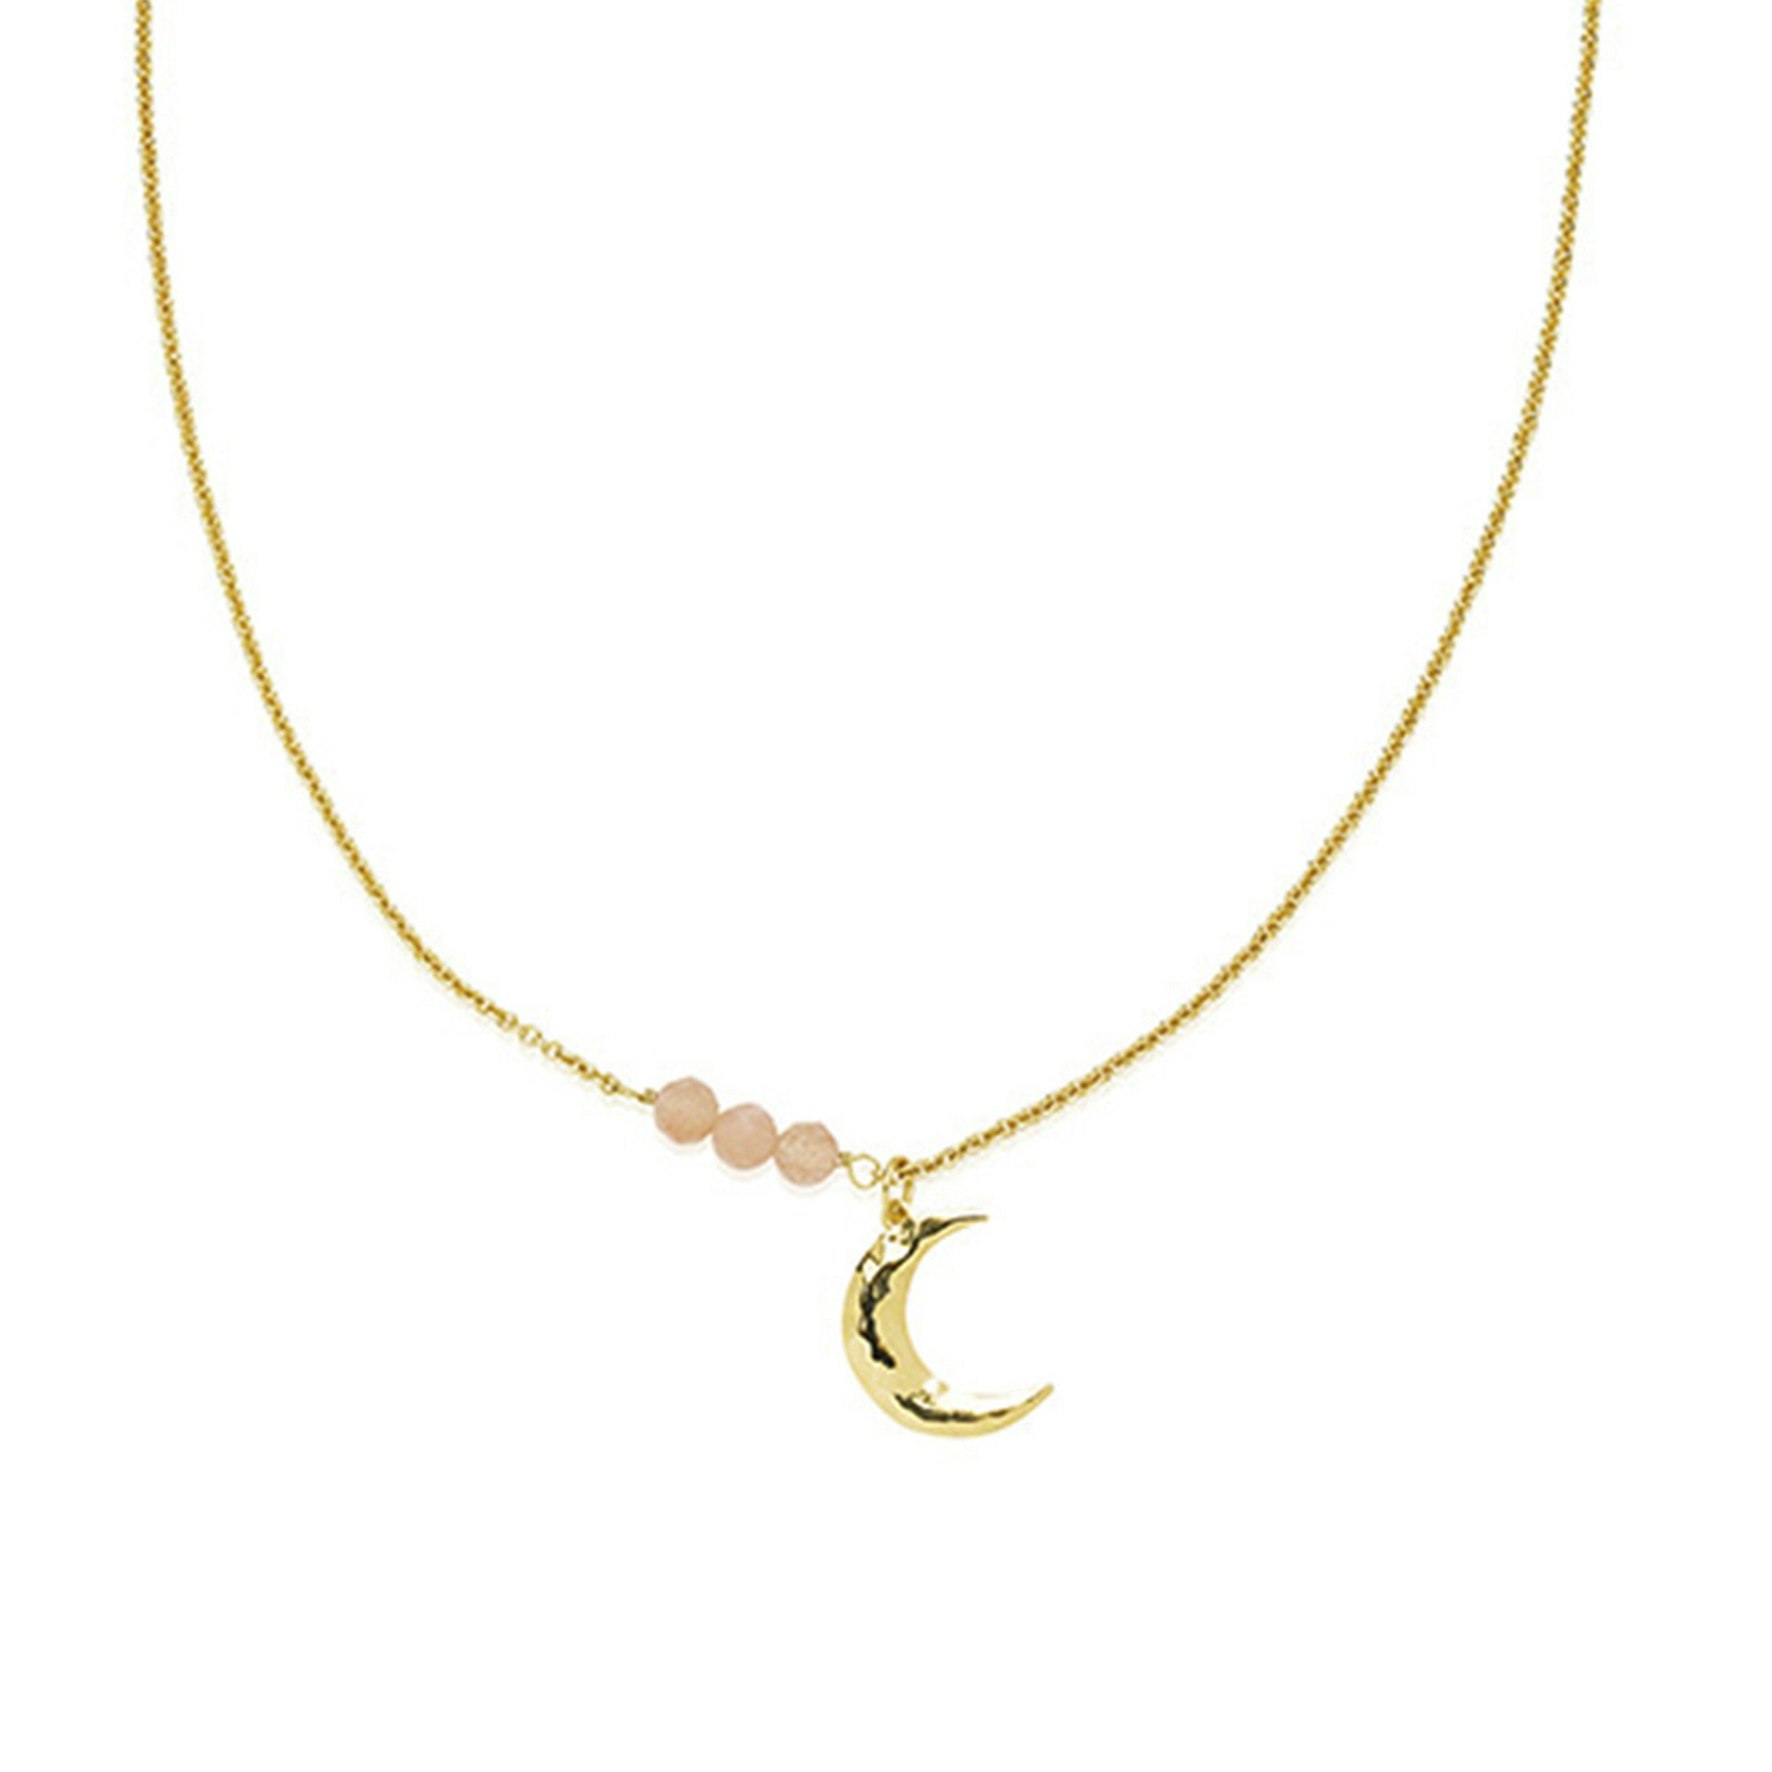 Mie Moltke Necklace With Moon And Pearls fra Izabel Camille i Forgyldt-Sølv Sterling 925